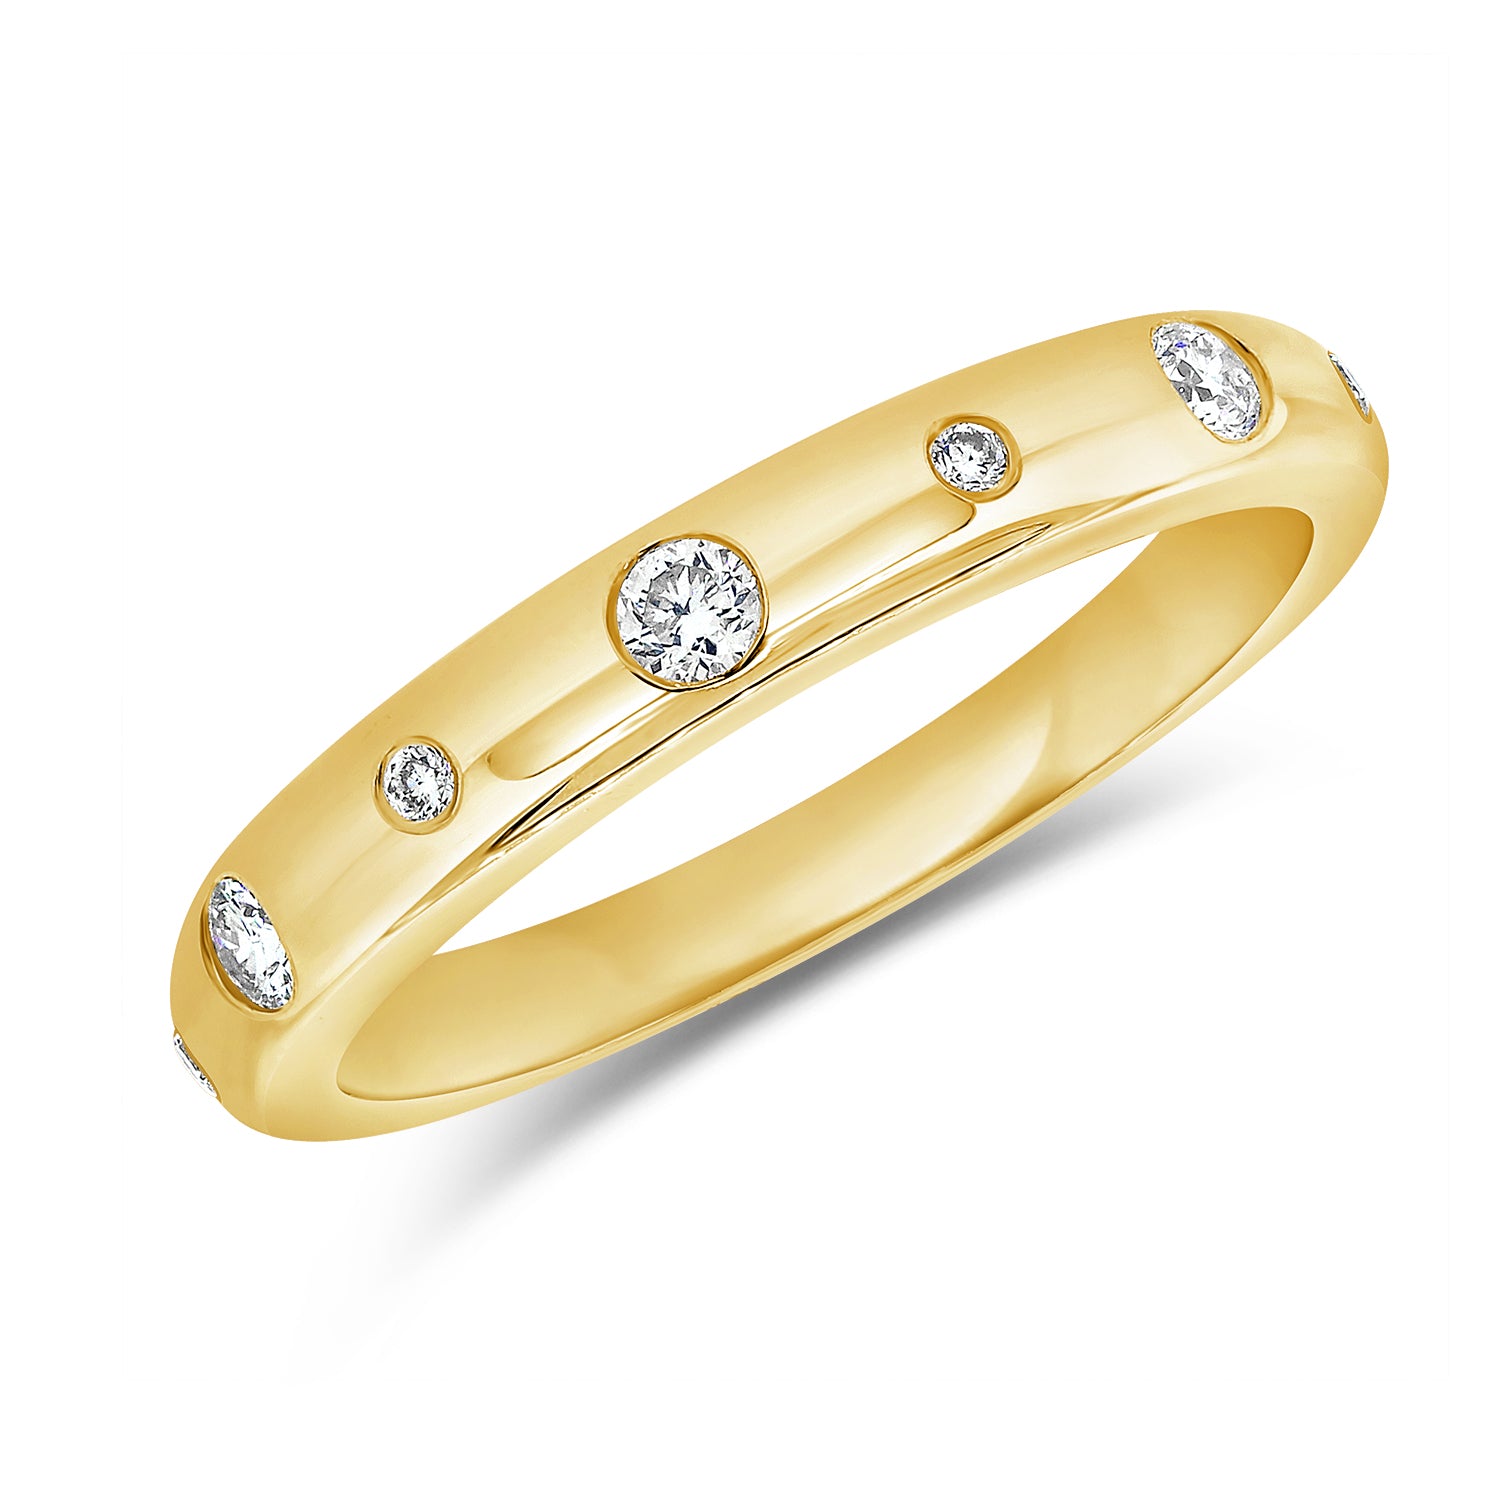 14k Gold & Diamond Ring - 0.17ct